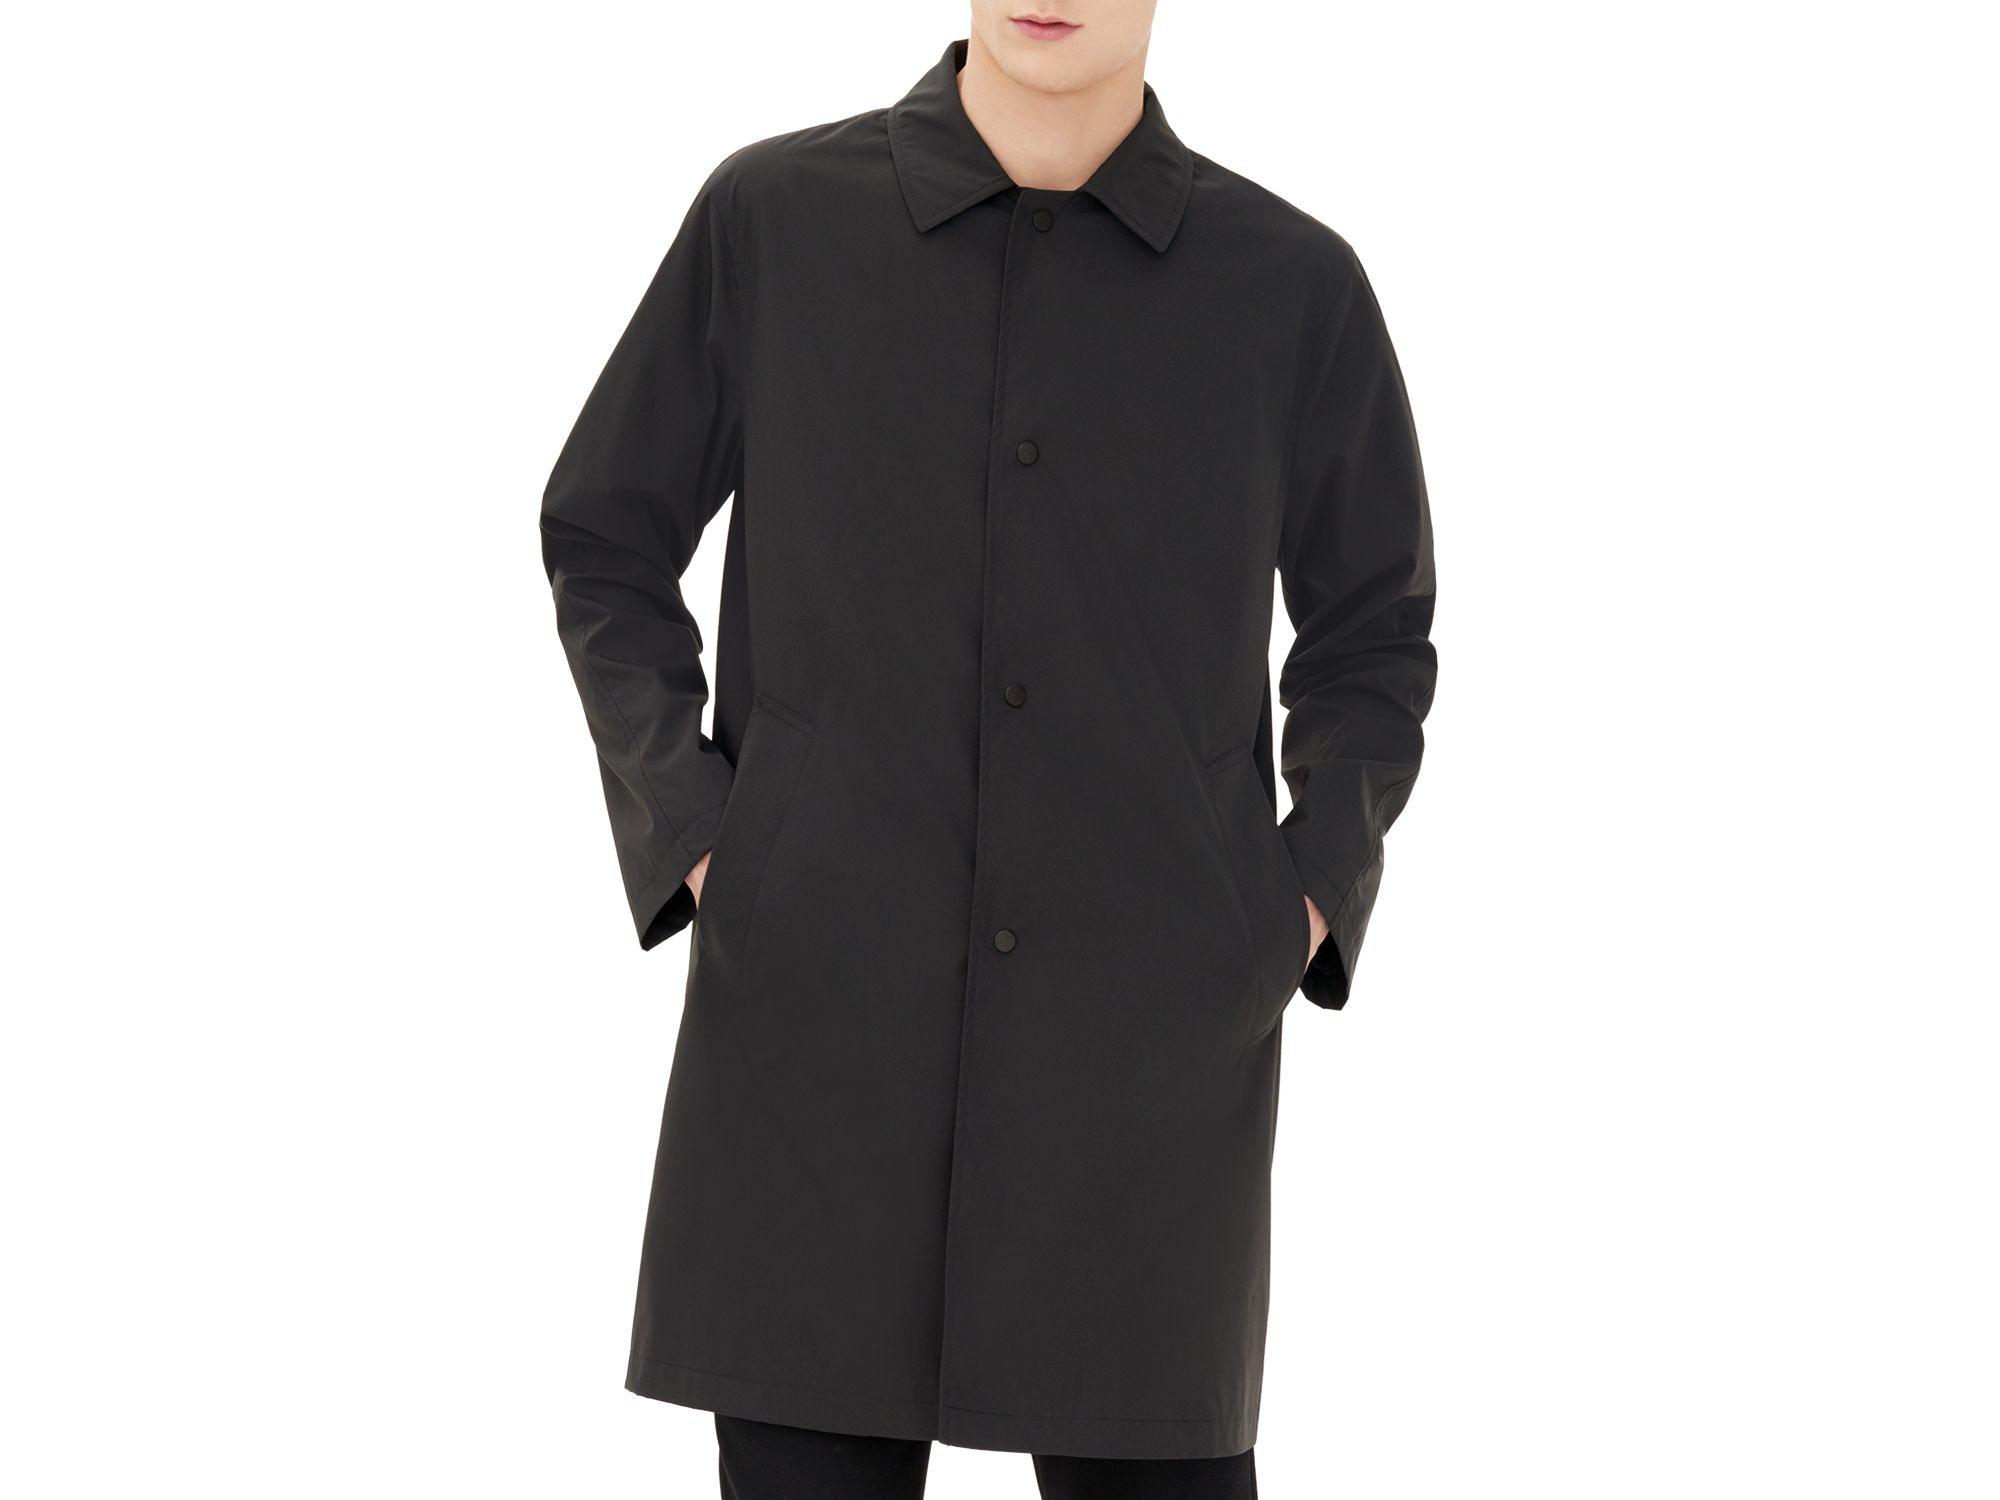 Sandro Cotton Neo Raincoat in Black for Men - Lyst